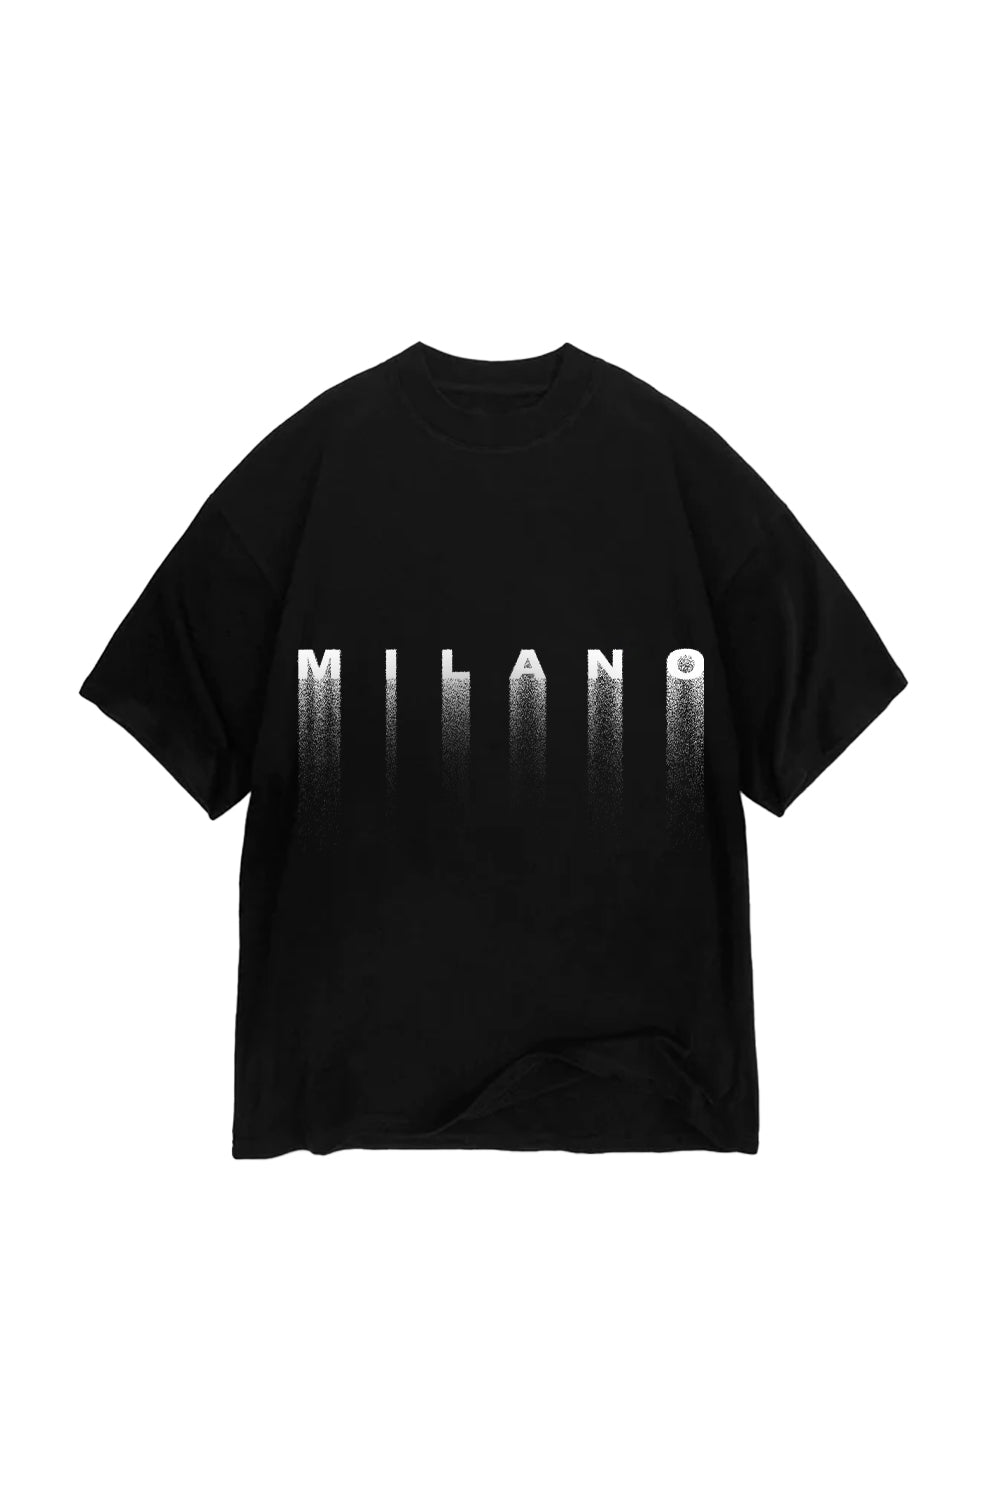 CREW Milano Tokyo Black Oversized T-Shirt